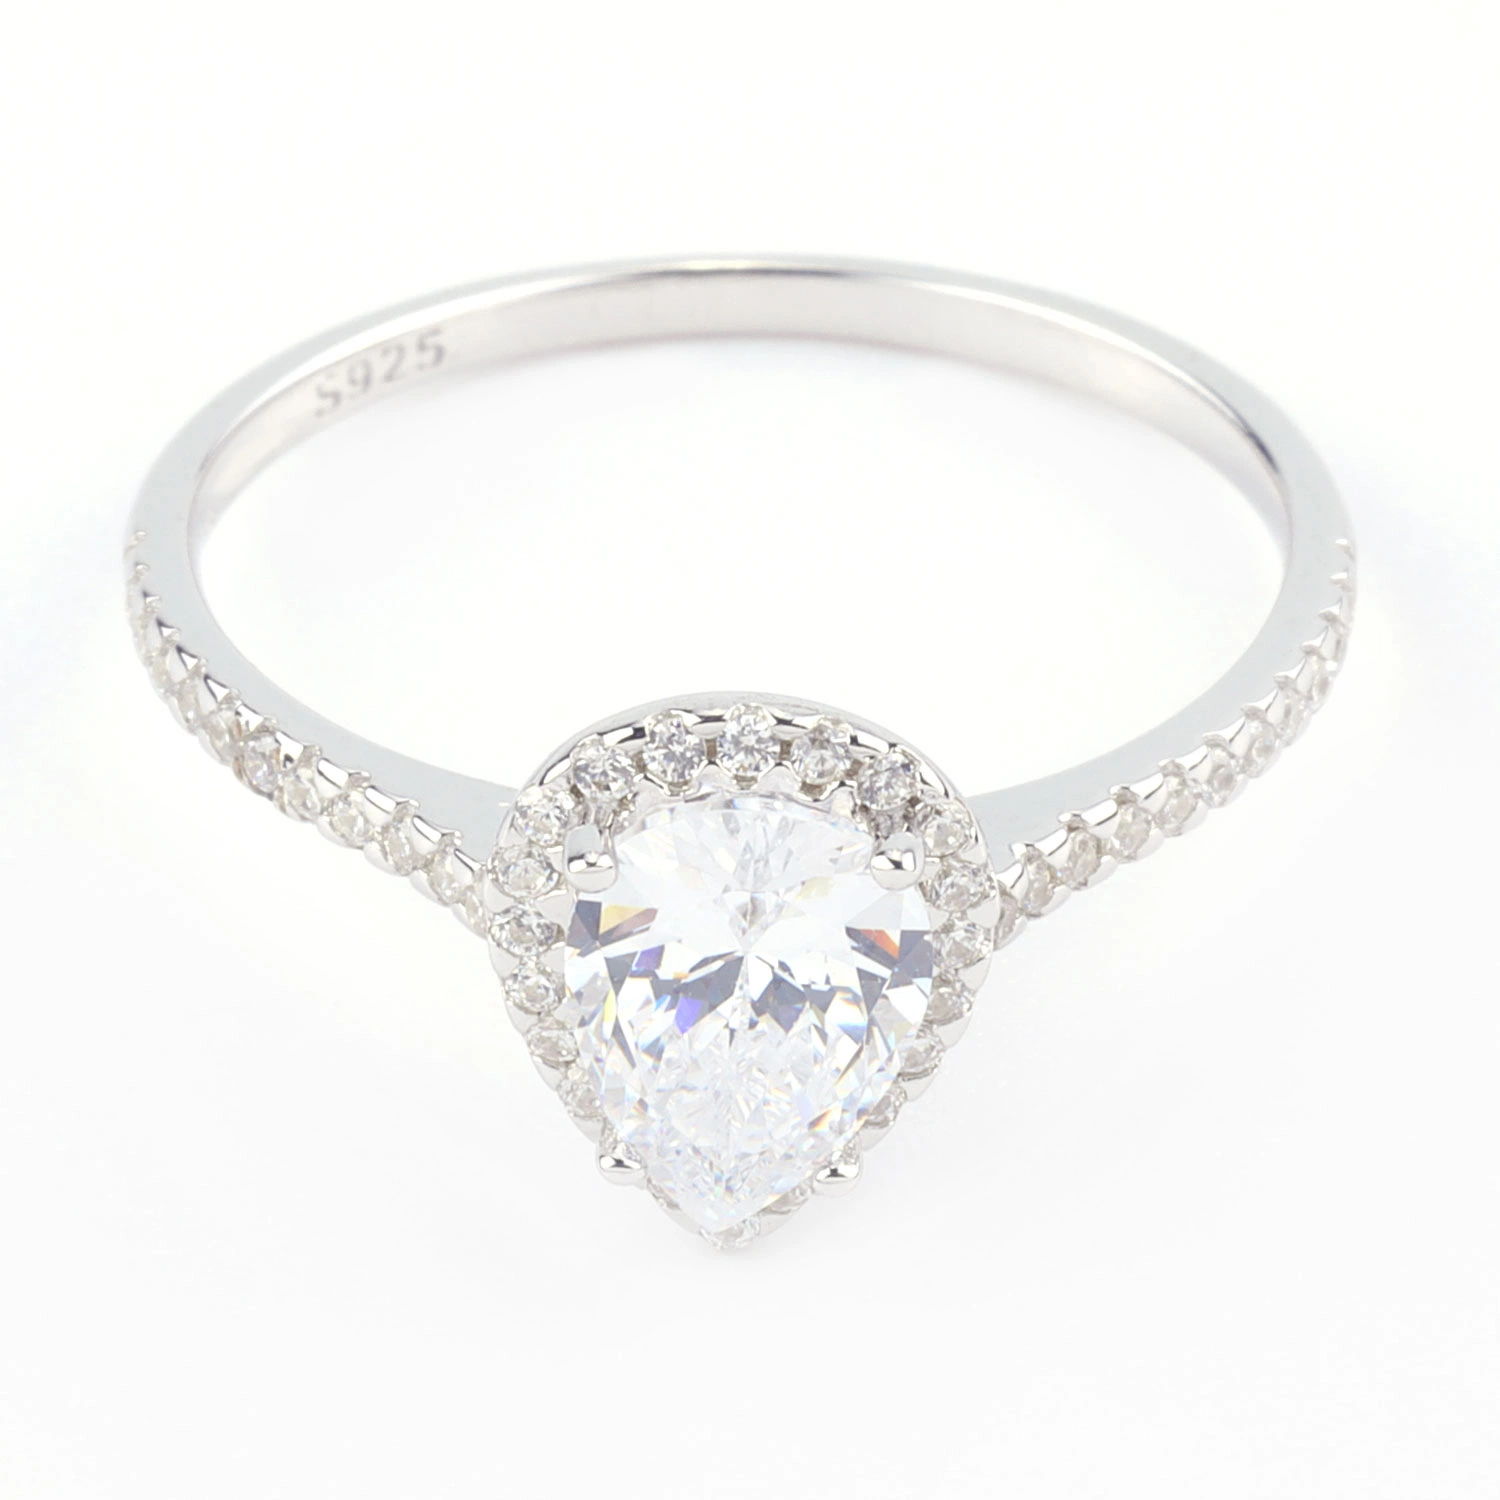 Дизайн Simple Fashion Gift Sterling Silver Jewelry Свадебные кольца для Женщины Оптовая торговля